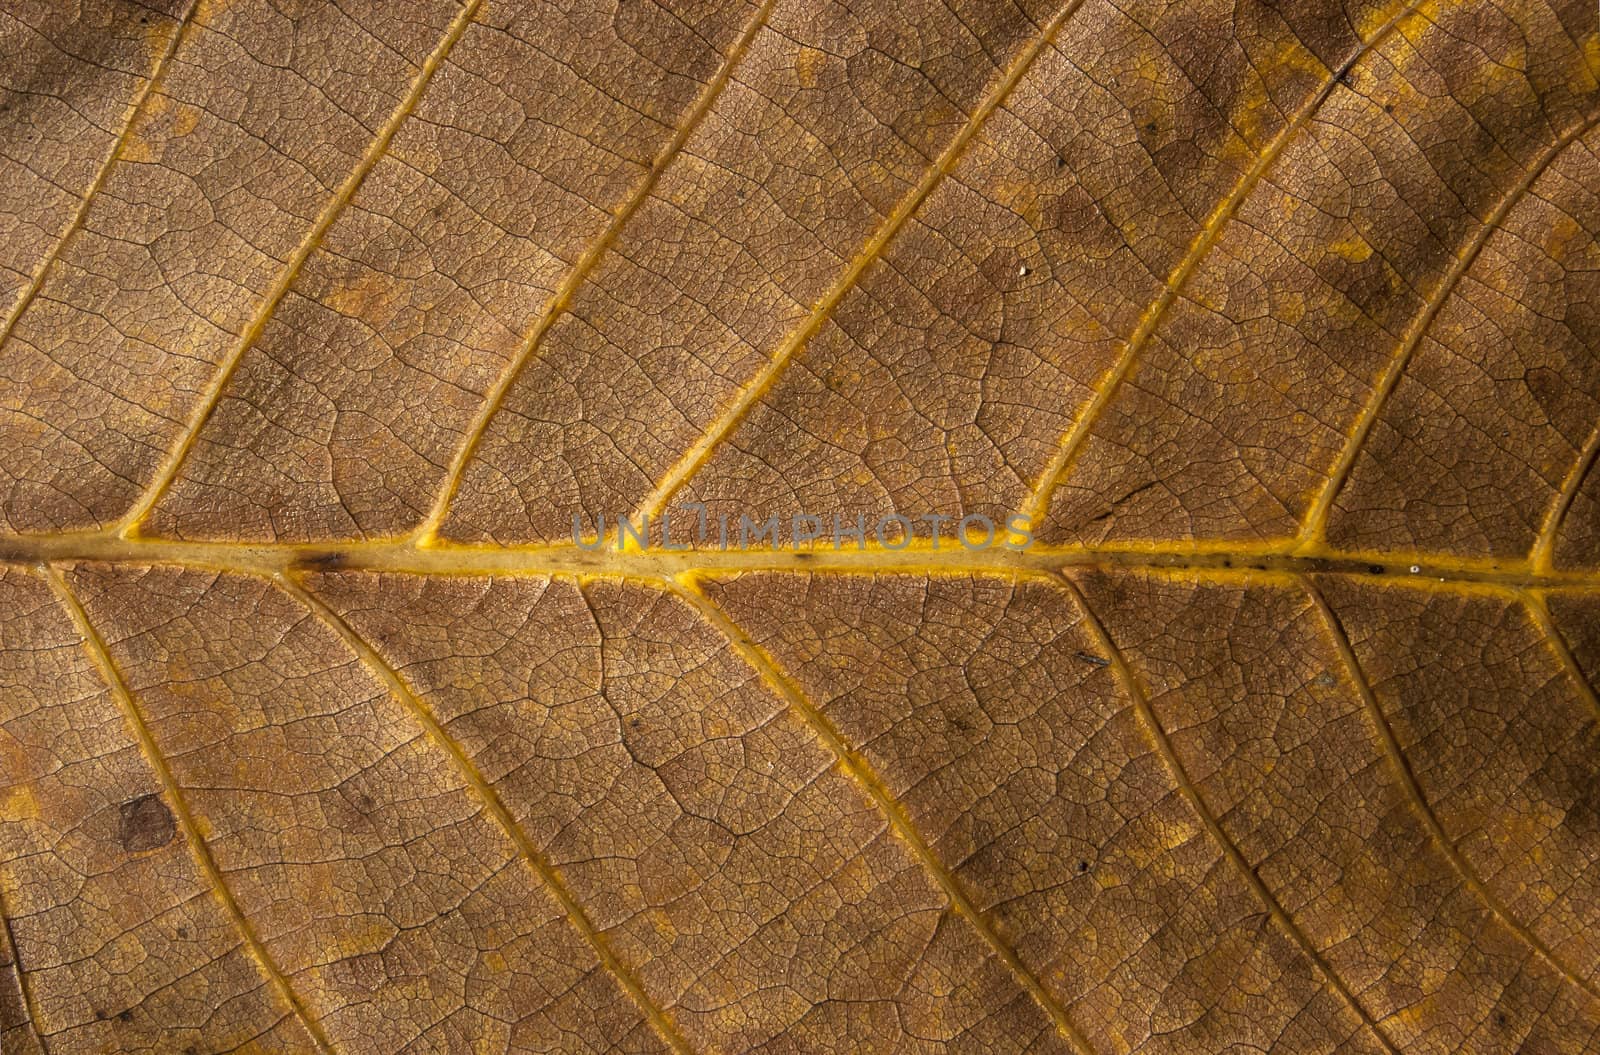 Dry leaf structure by varbenov